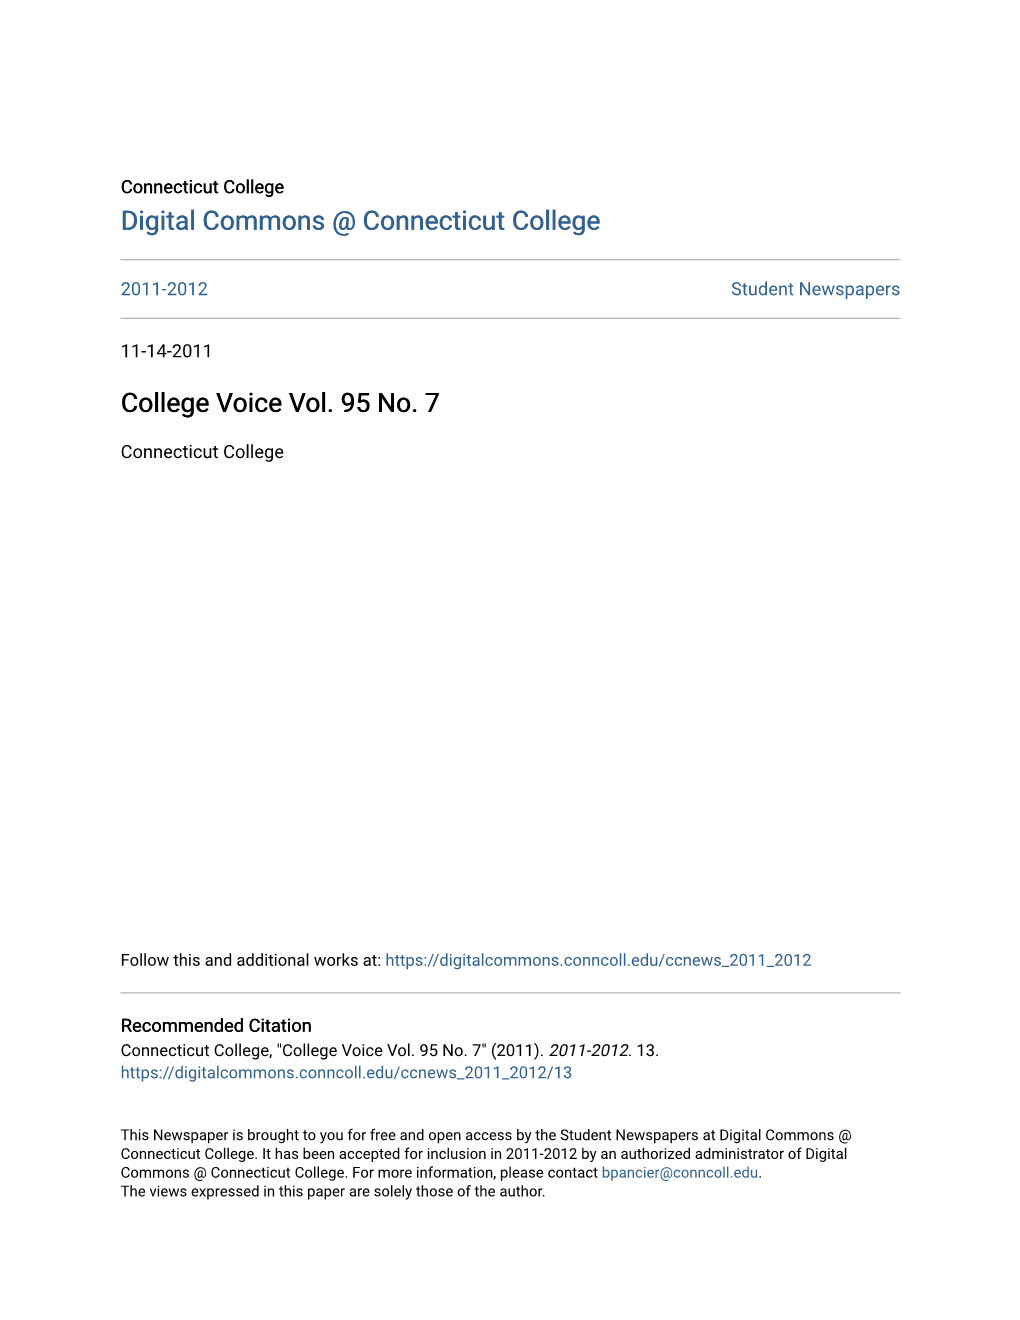 College Voice Vol. 95 No. 7